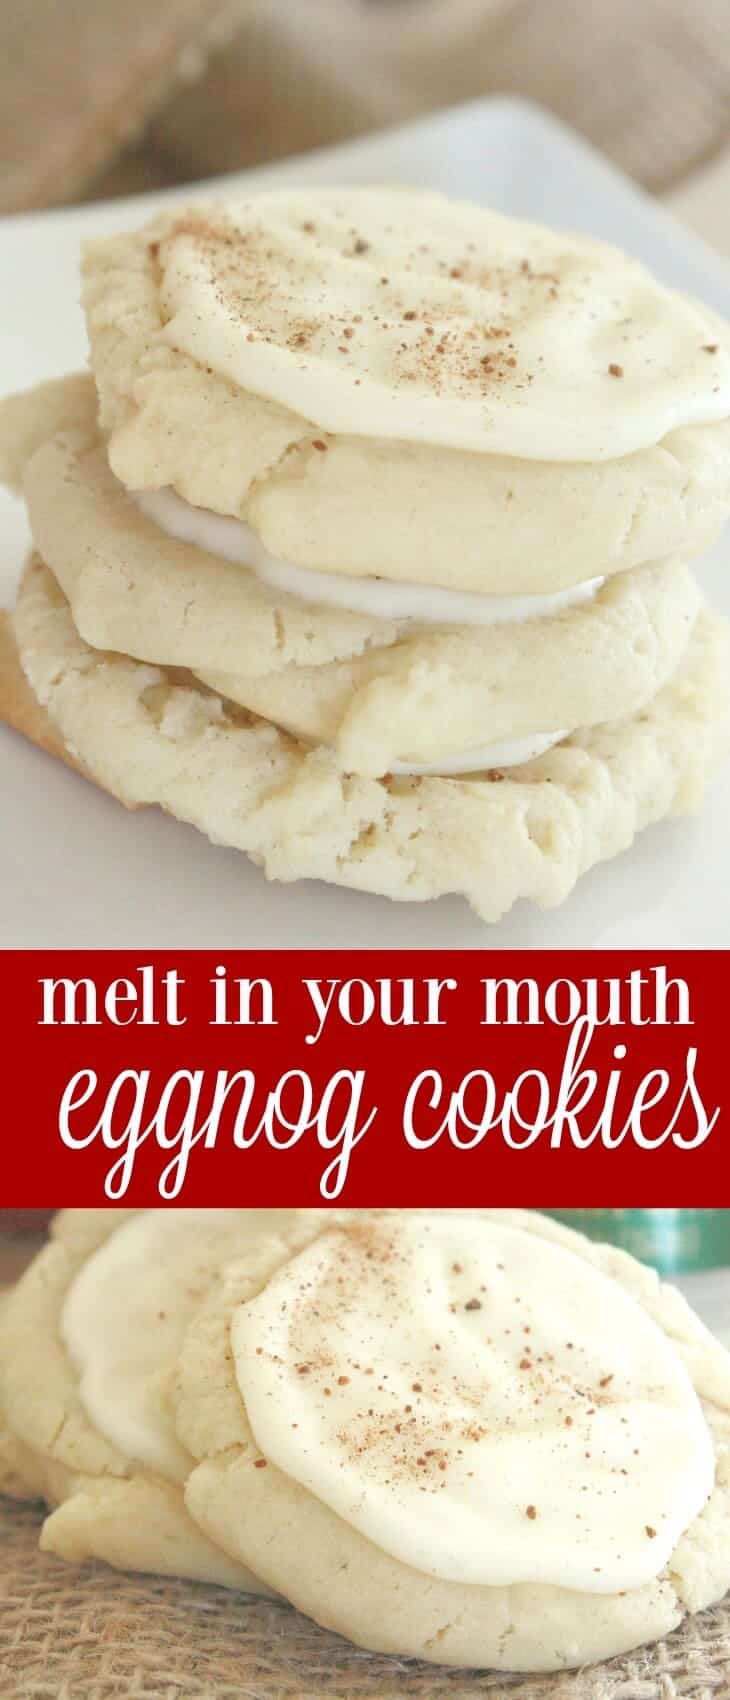 Eggnog Cookies by Coupon Cravings